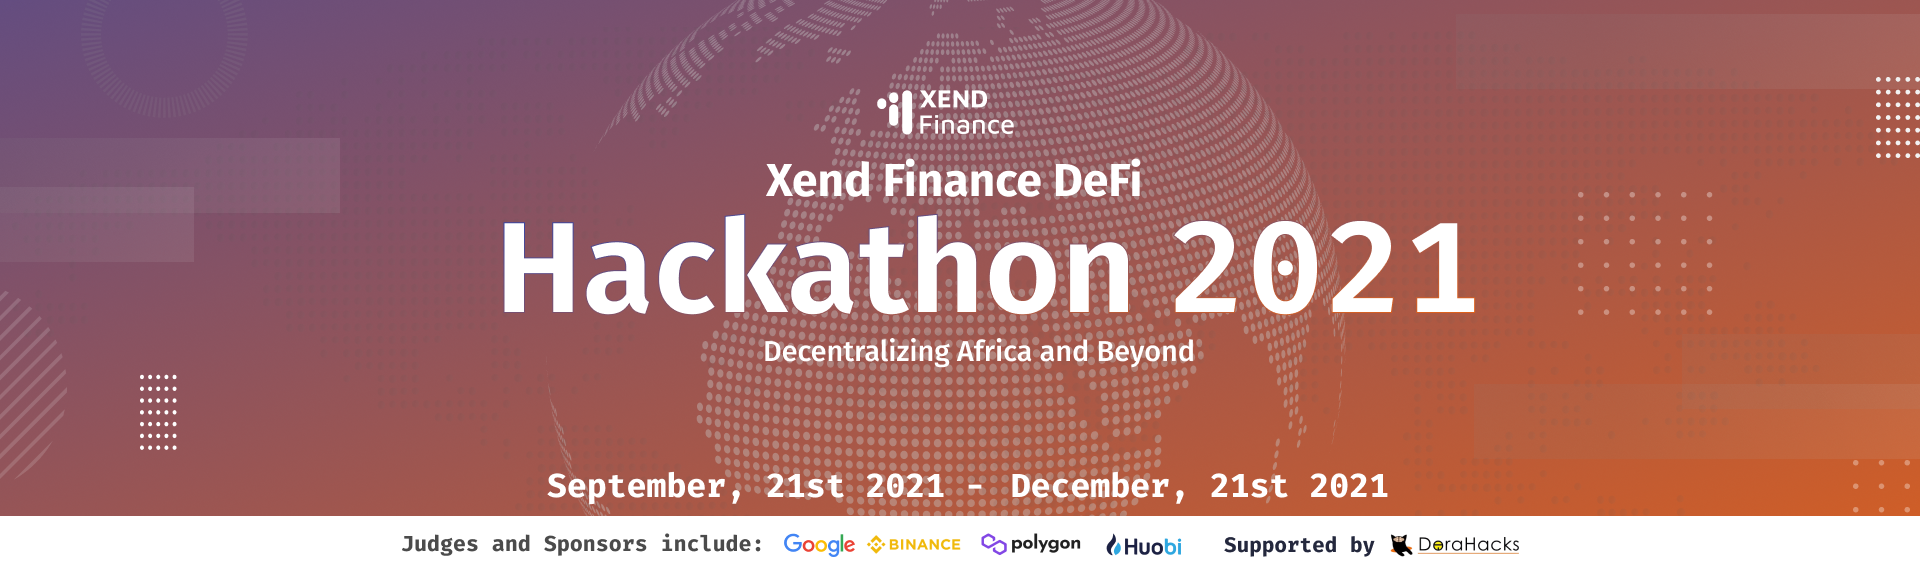 Voting Guide: Xend Finance DeFi Hackathon 2021